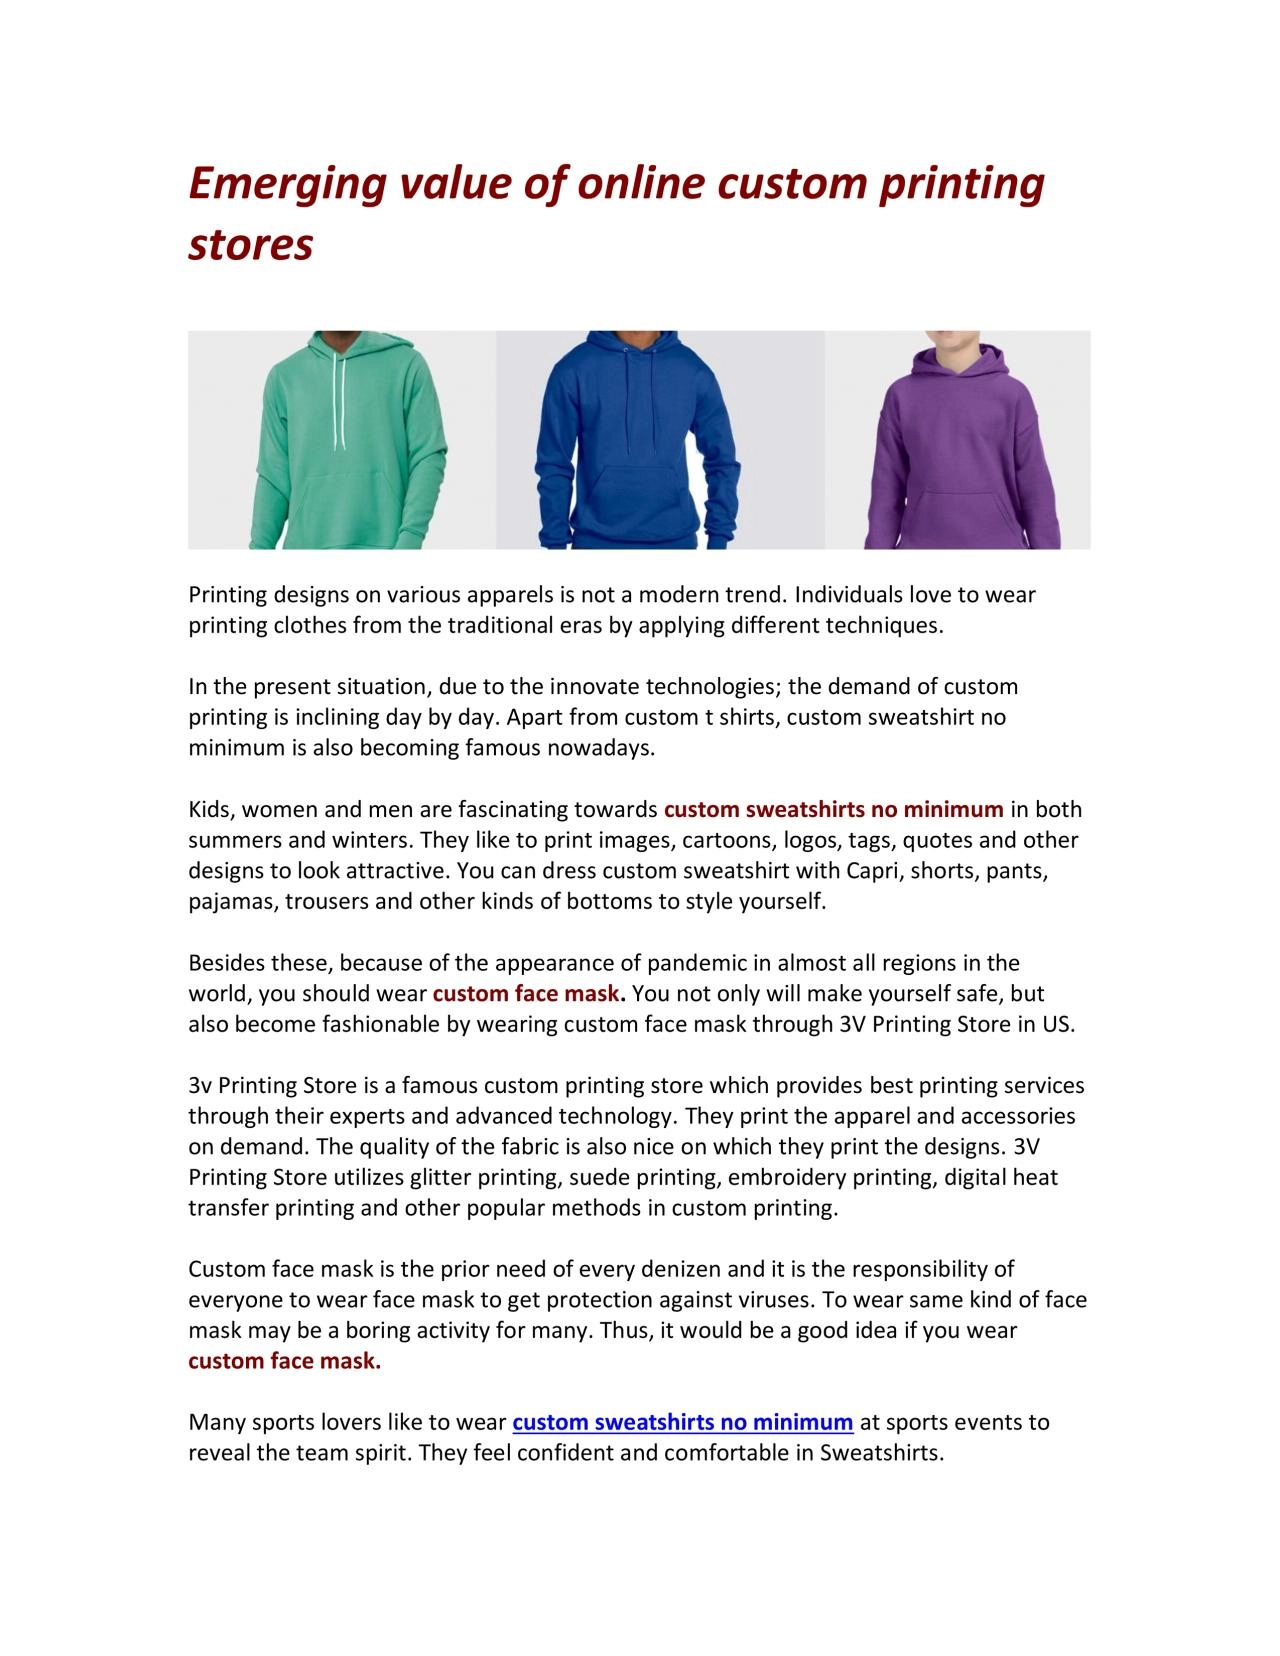 Emerging value of online custom printing stores